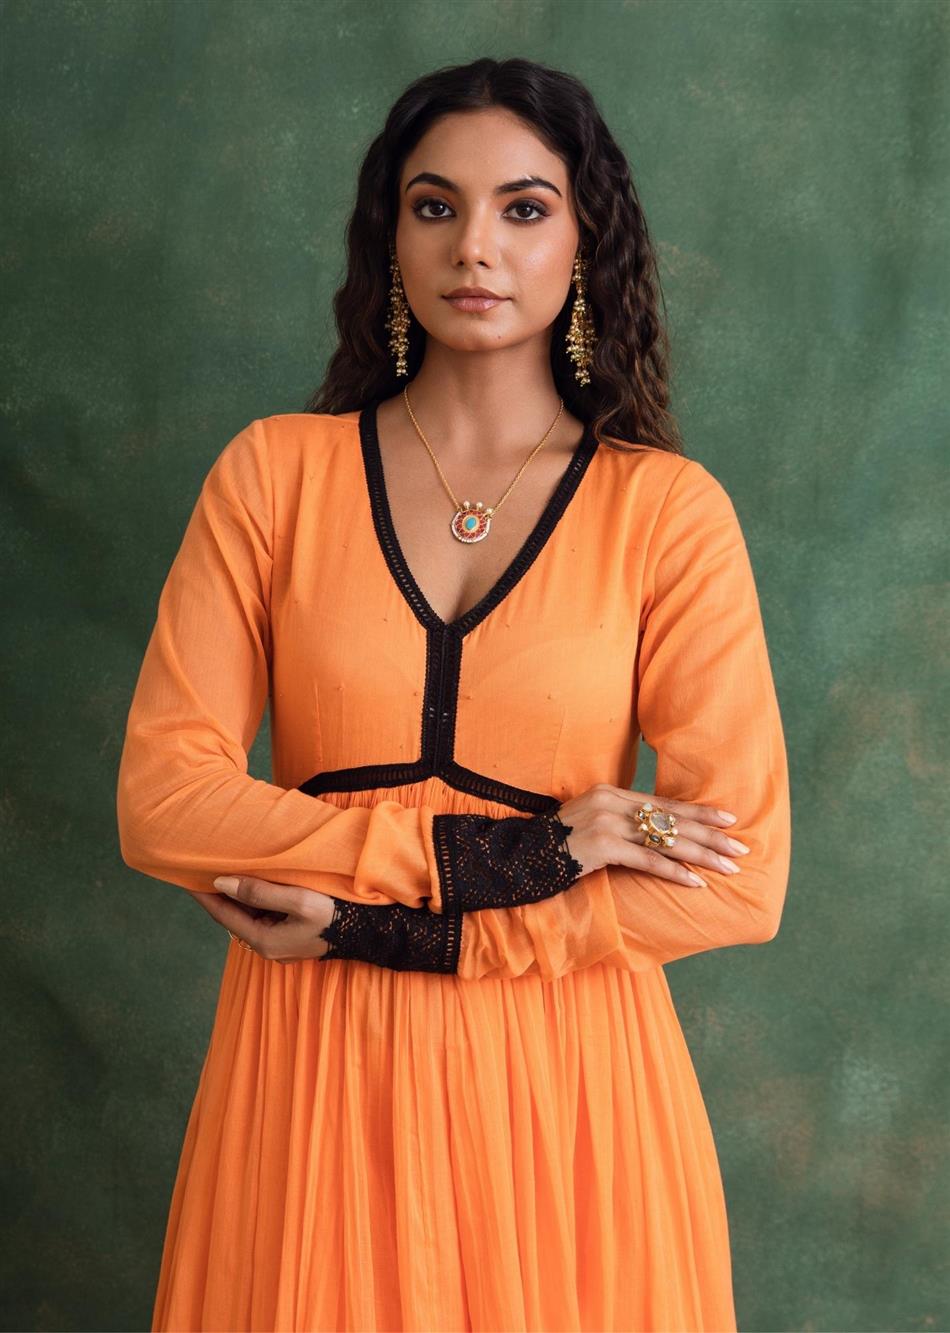 Rangrezee - Candy Orange Anarkali Kurta with Black Lace Details By Jovi Fashion